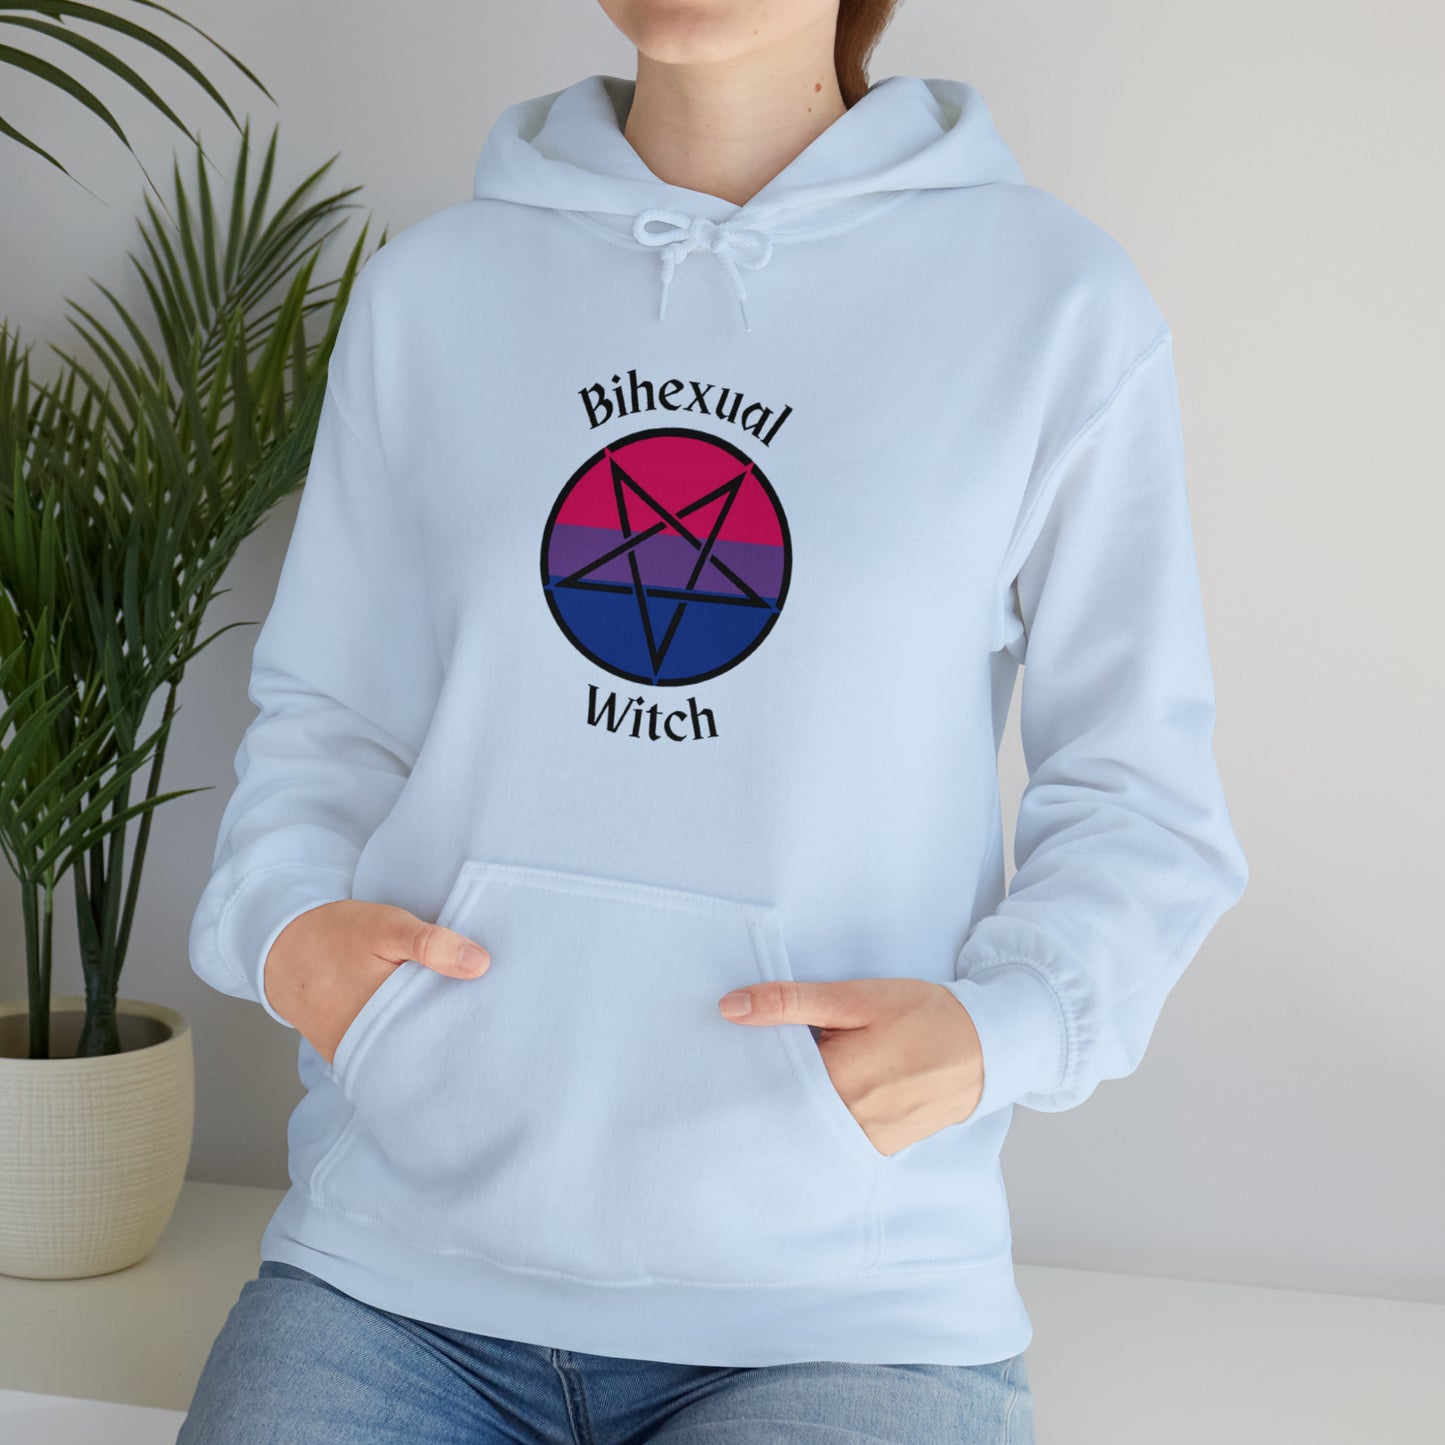 Bihexual Witch Unisex Hooded Sweatshirt